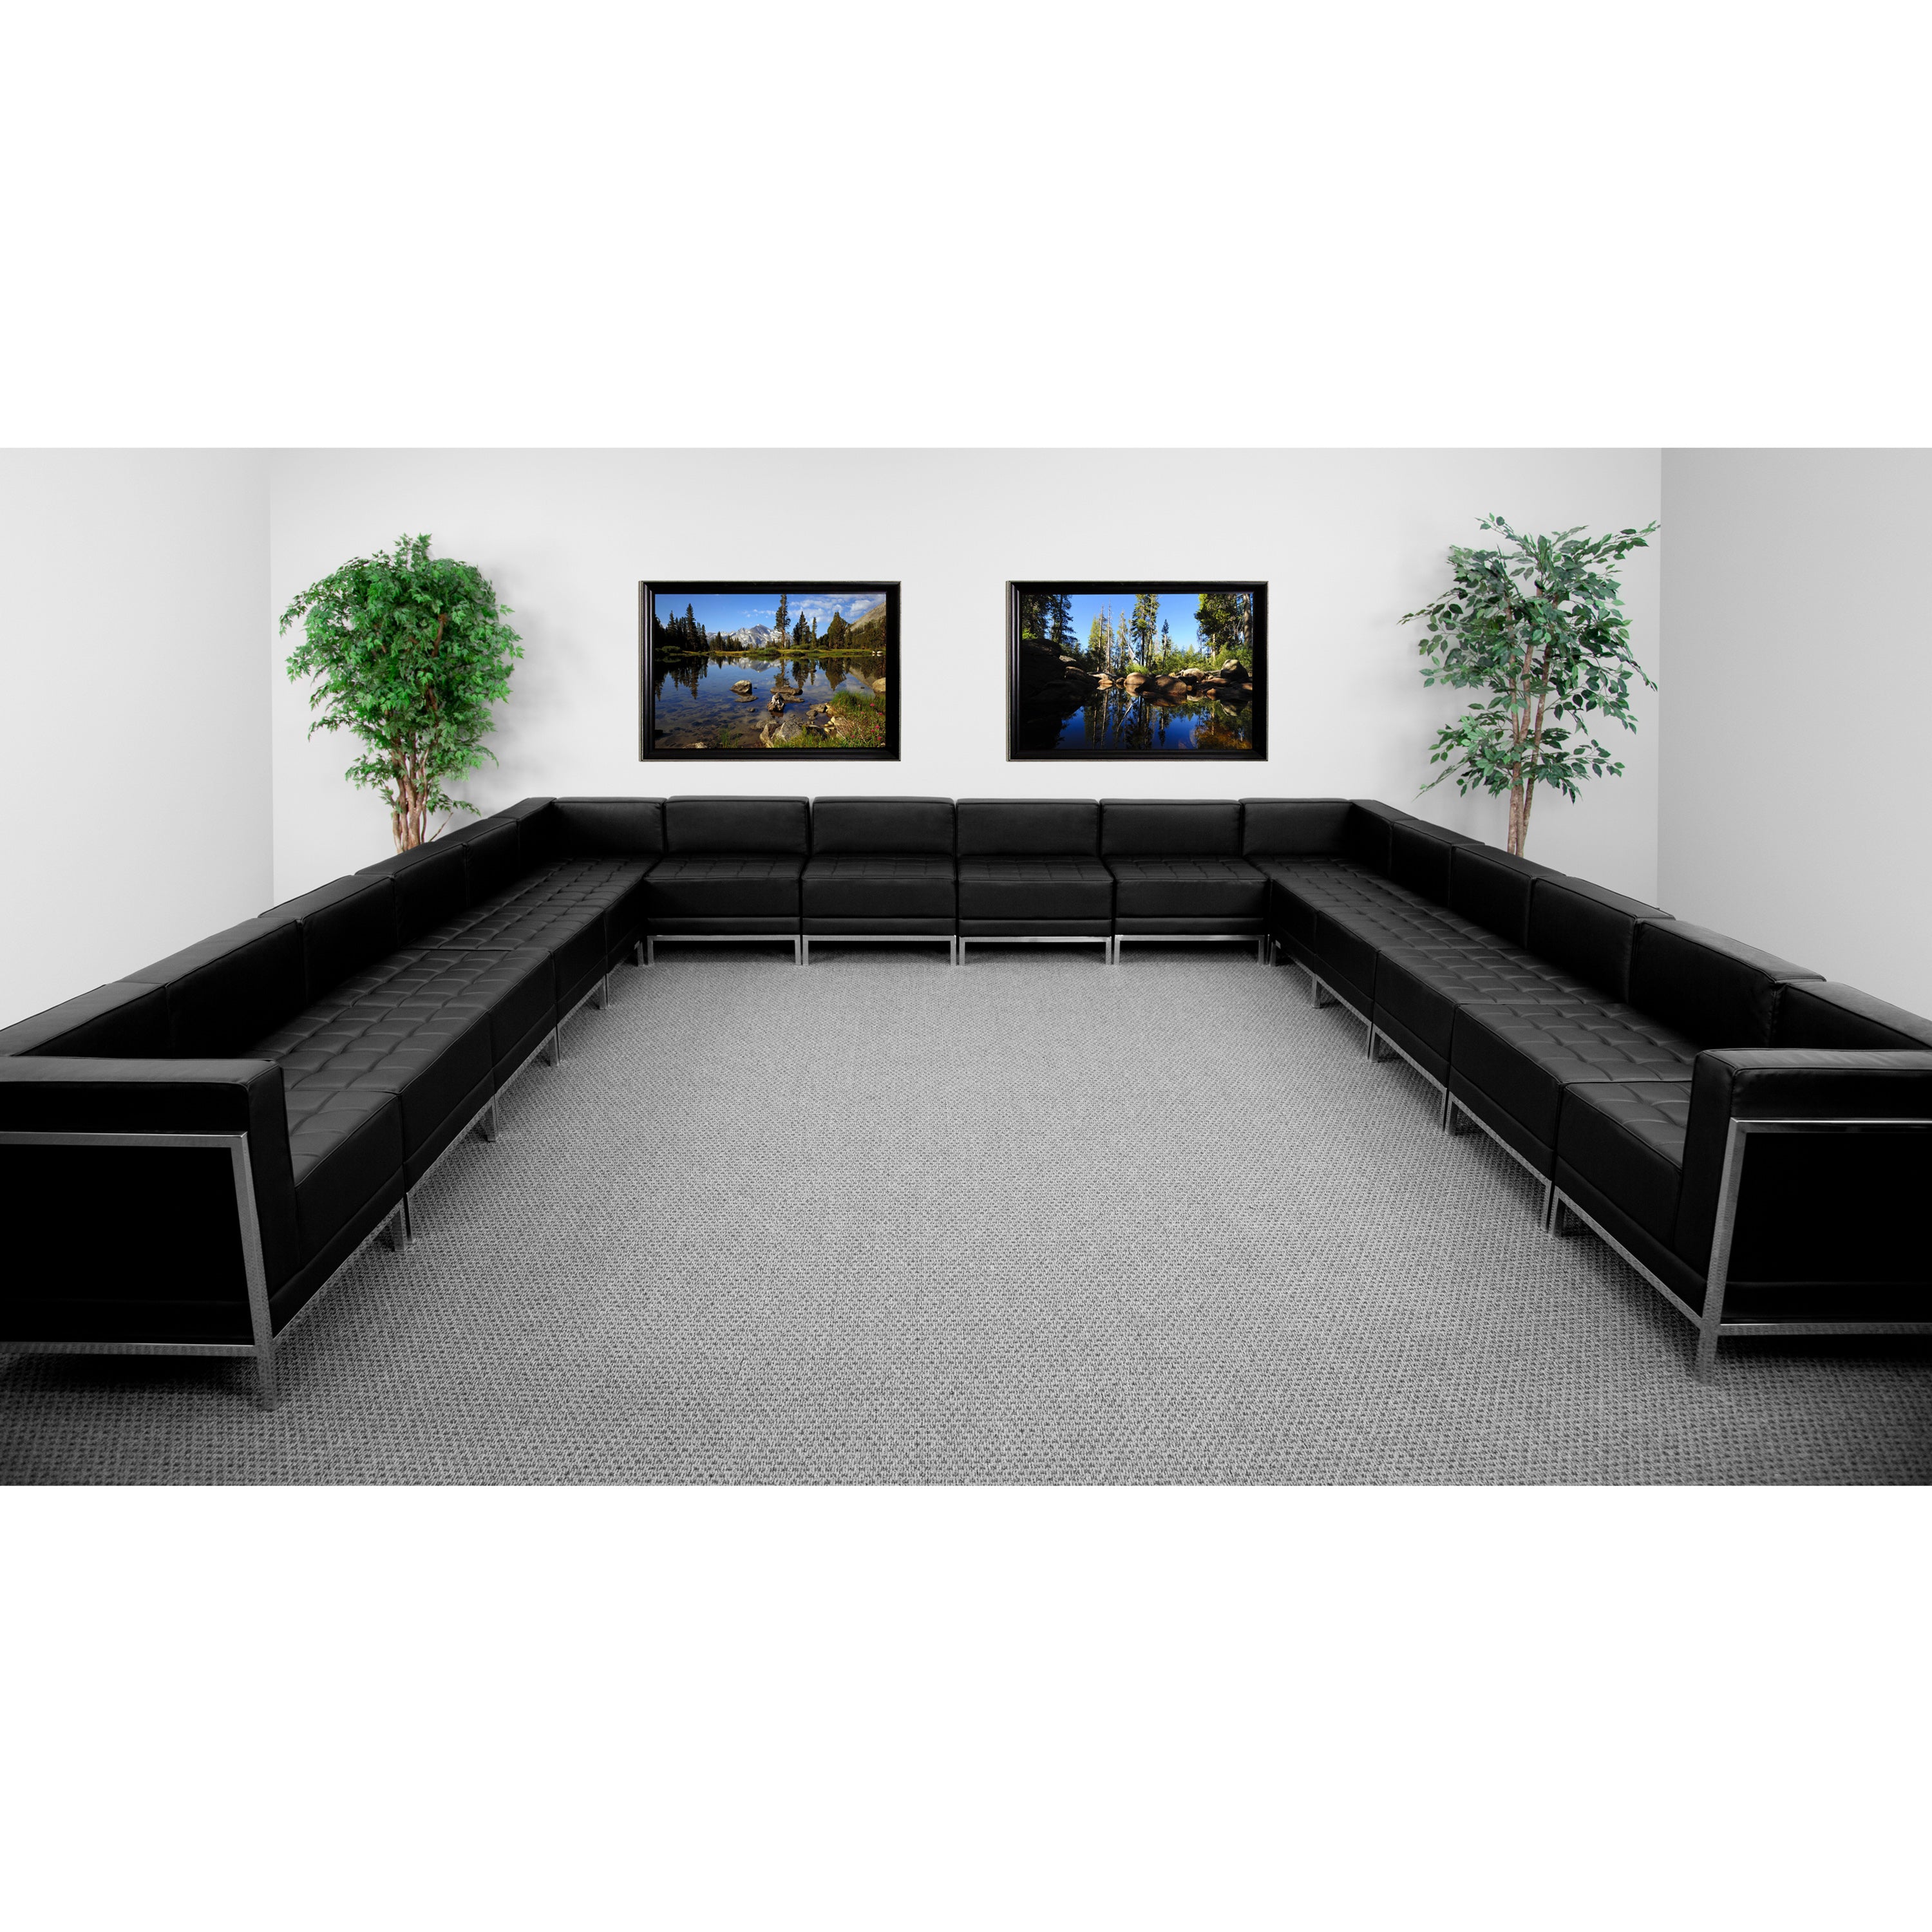 HERCULES Imagination Series LeatherSoft U-Shape Sectional Configuration, 16 Pieces-Modular Reception Set-Flash Furniture-Wall2Wall Furnishings